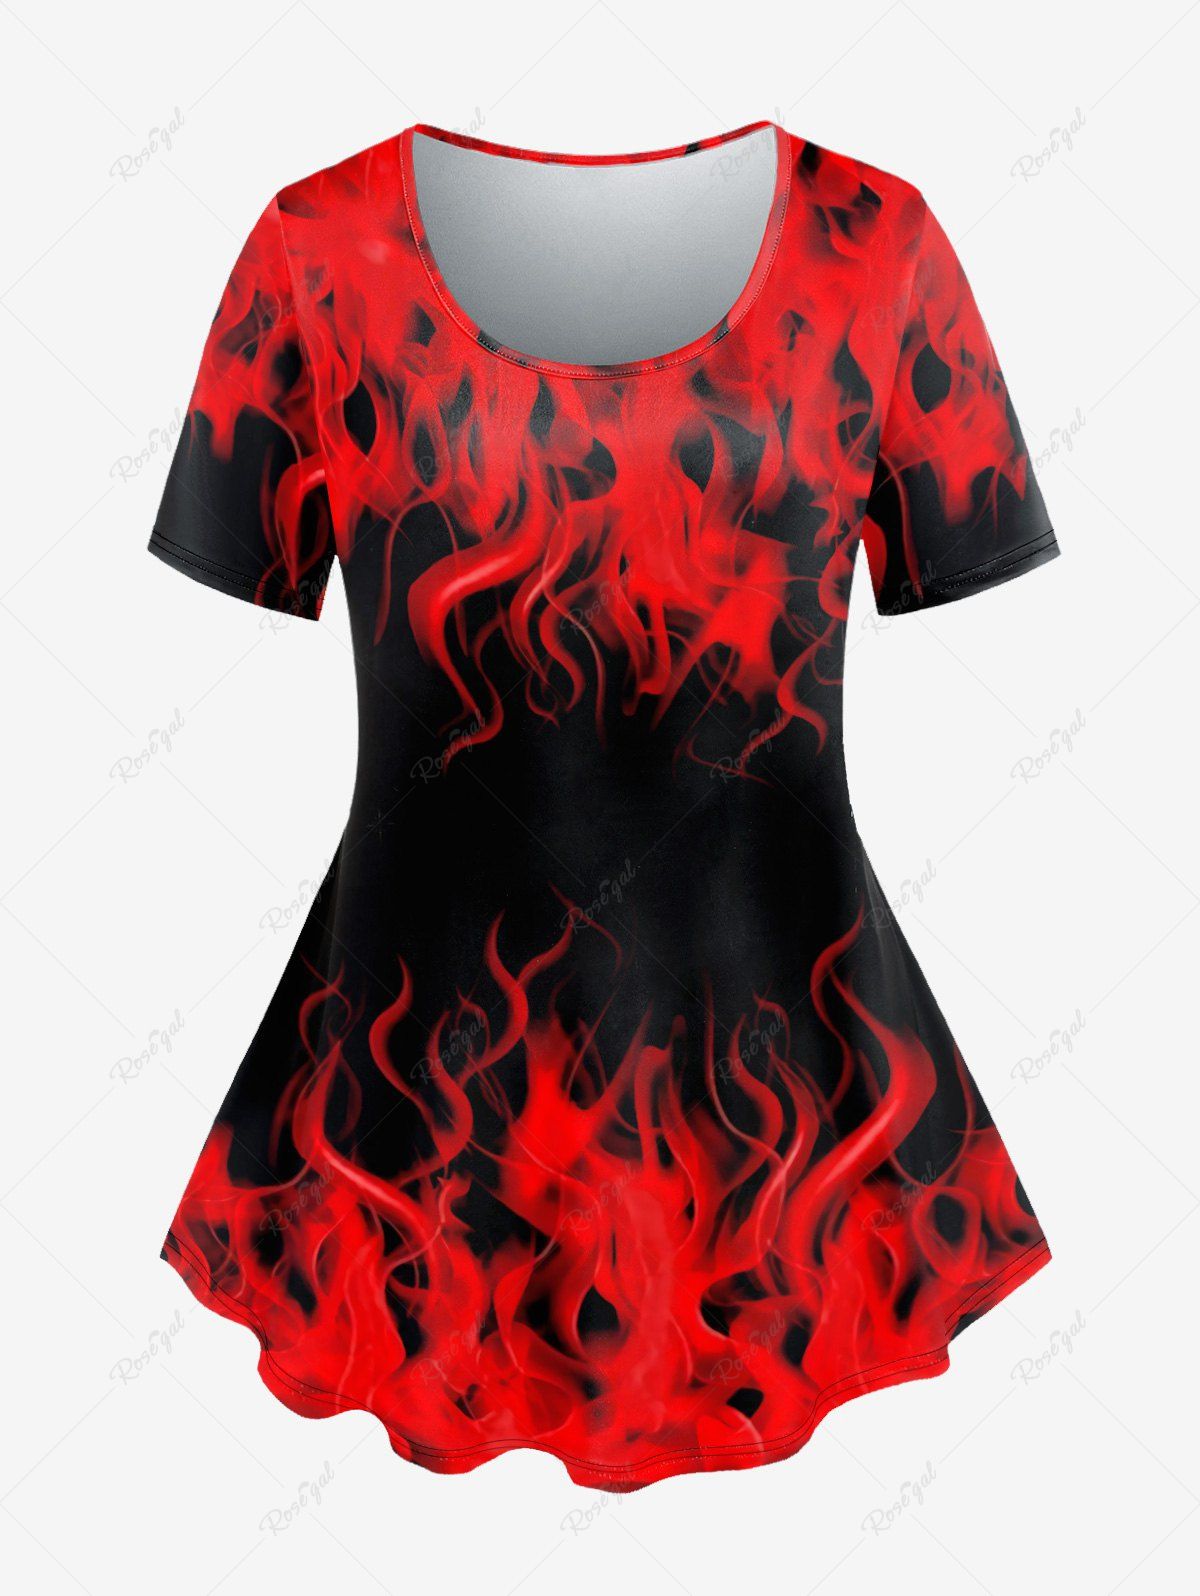 Chic Gothic 3D Flame Print Short Sleeve T-Shirt  